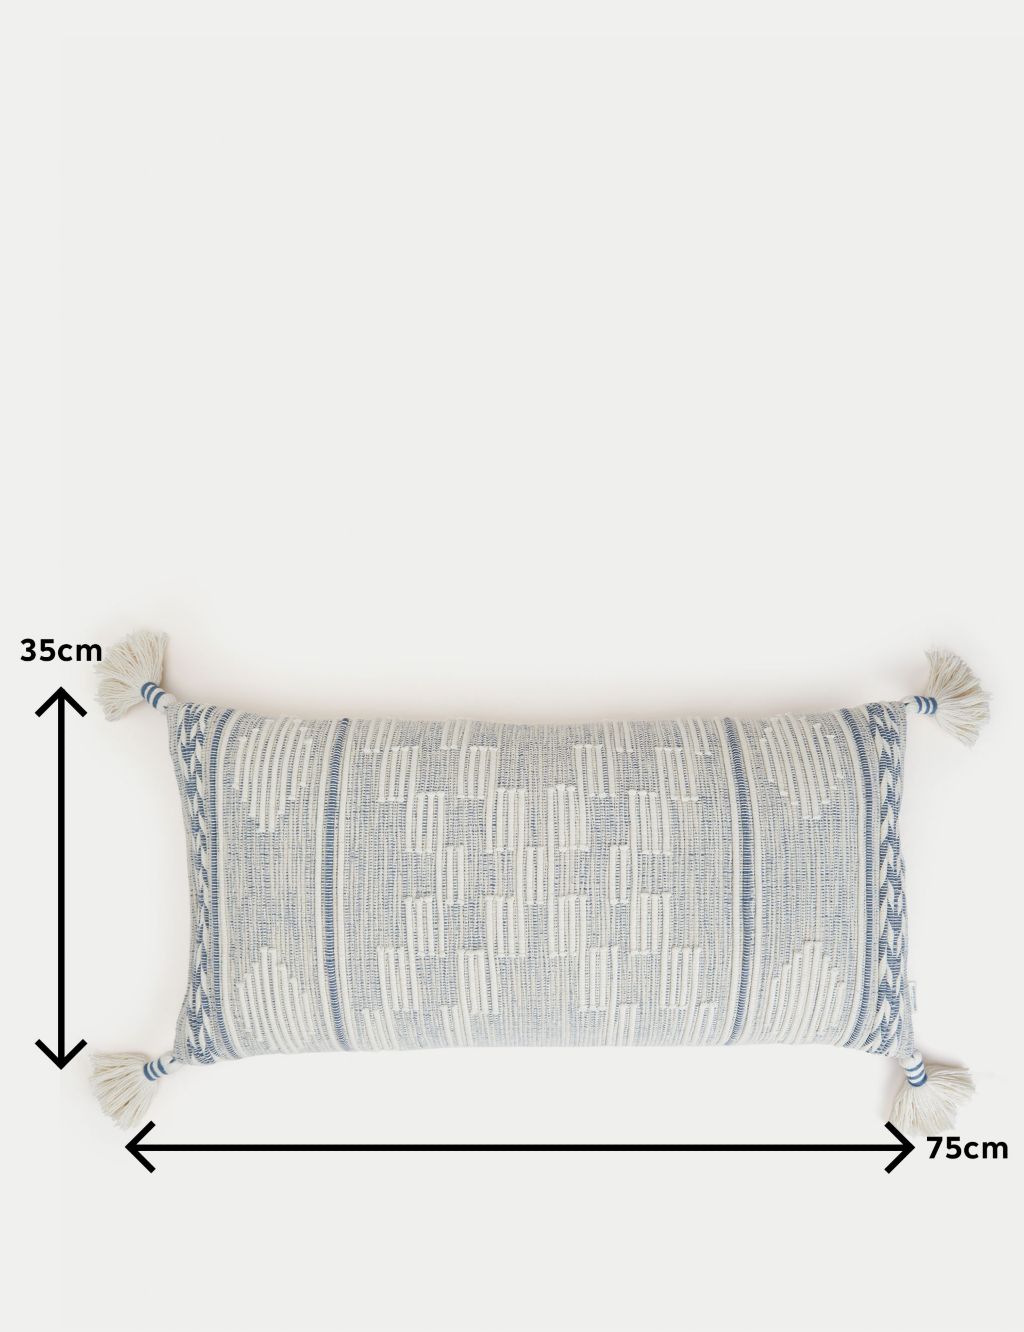 Seville Amar Large Textured Bolster Cushion 5 of 7